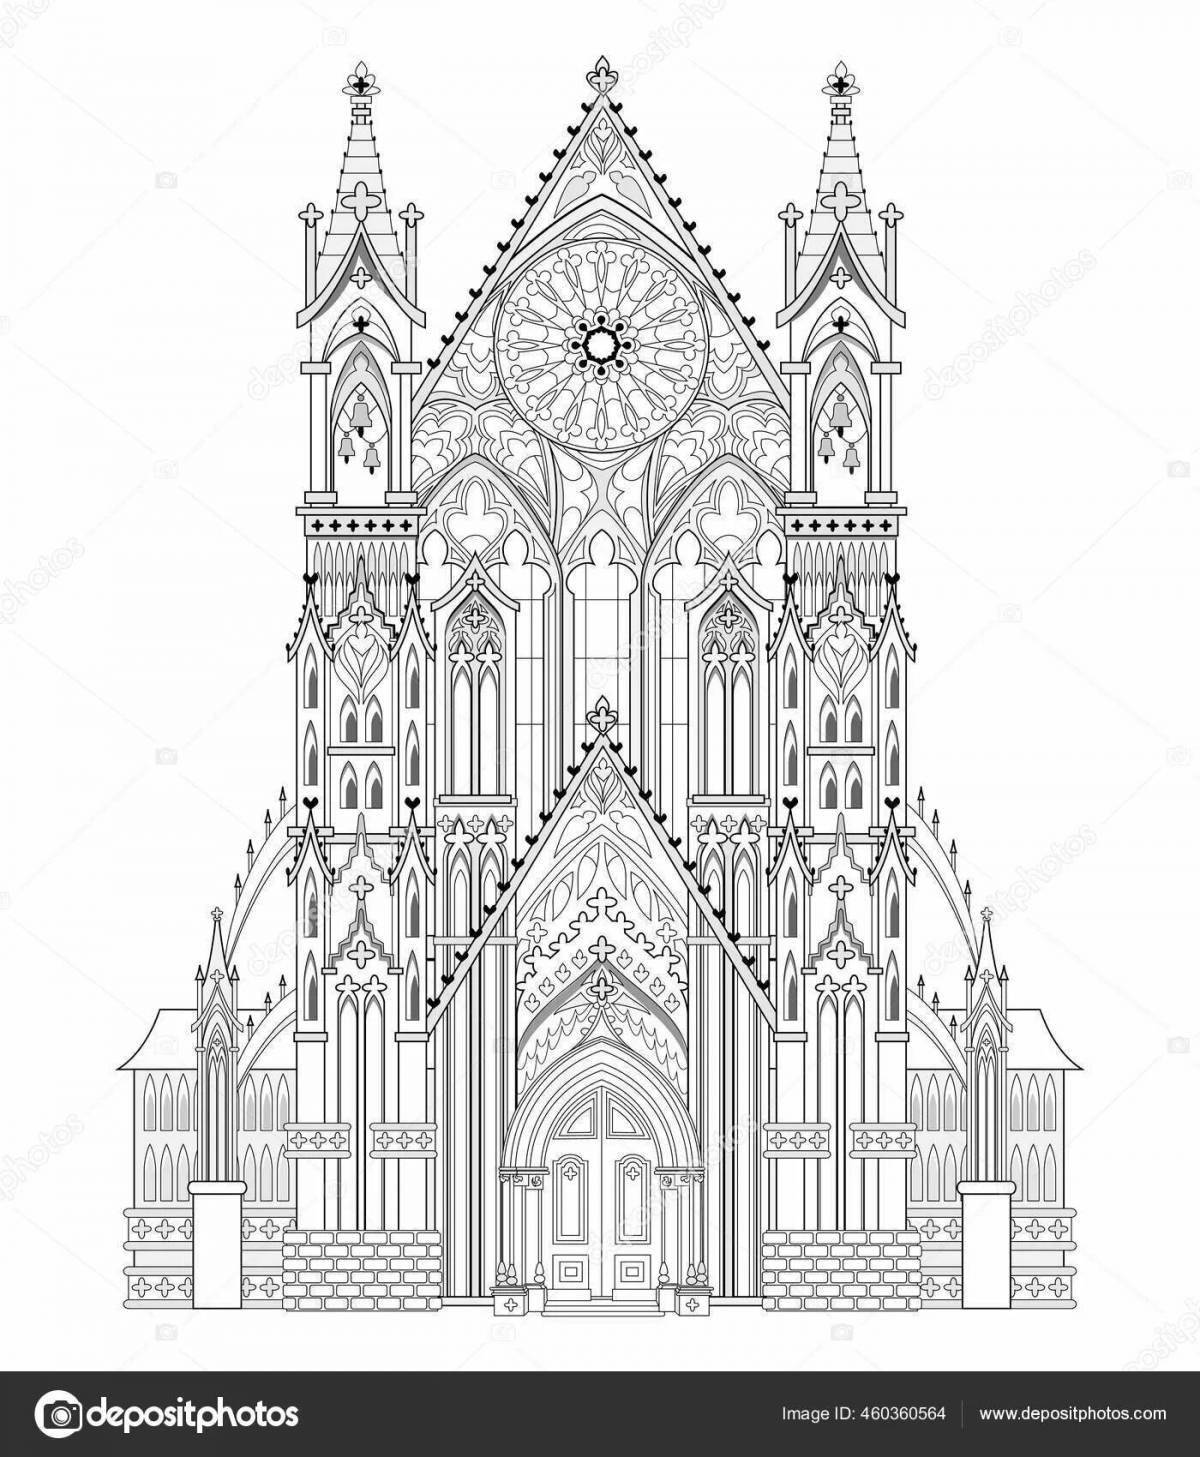 Coloring page elegant gothic castle